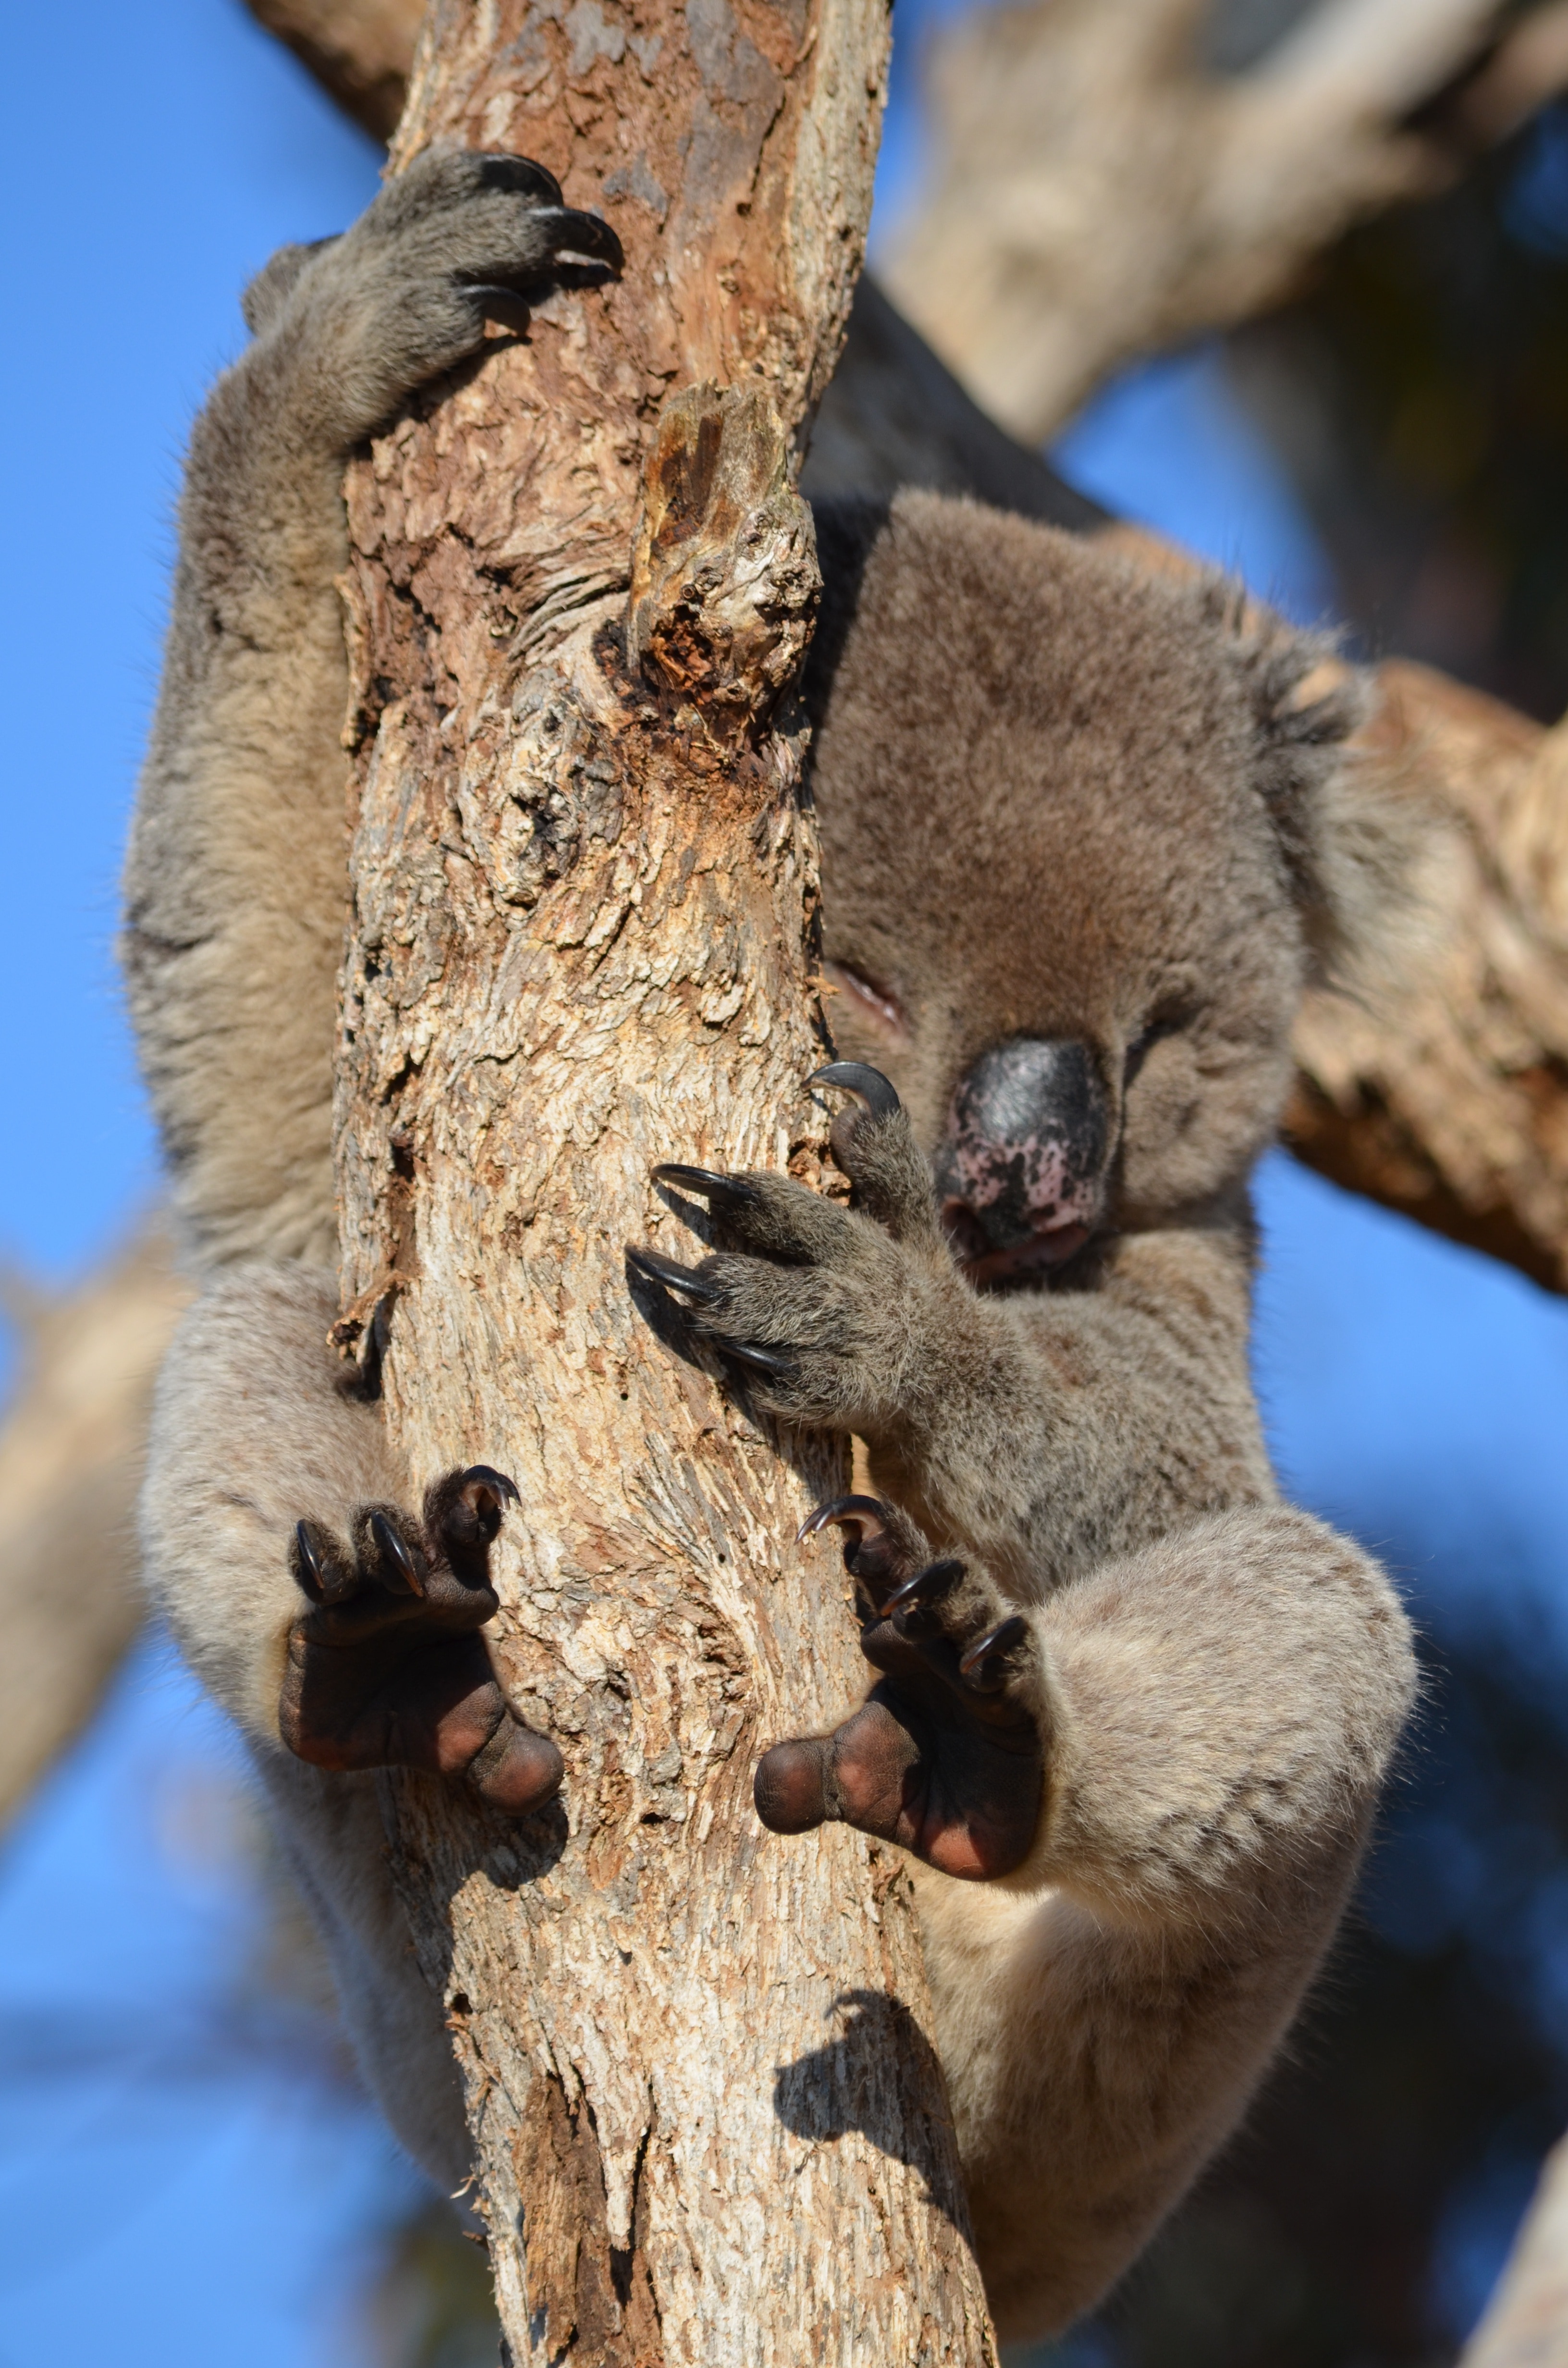 photo of a Koala climbing on tree during daytime